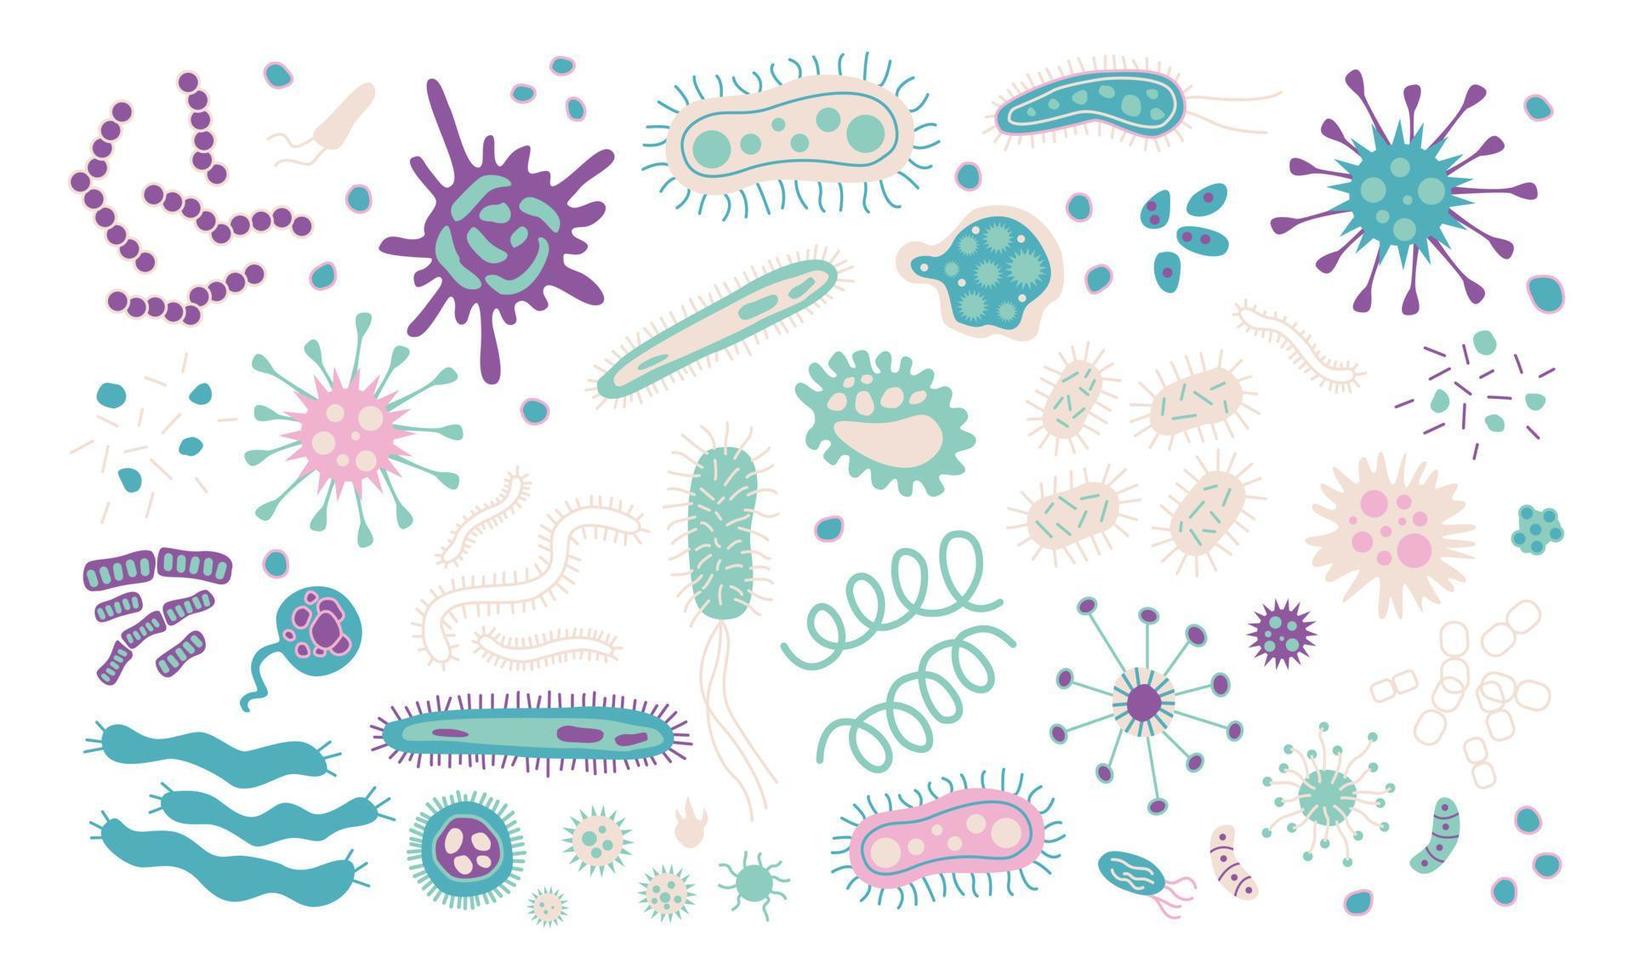 conjunto de diferentes paquetes de microorganismos infecciosos en azul, rosa. colección de dibujos animados de gérmenes infecciosos, protestas, microbios. montón de enfermedades, causan bacterias, virus. ilustración plana dibujada a mano vector